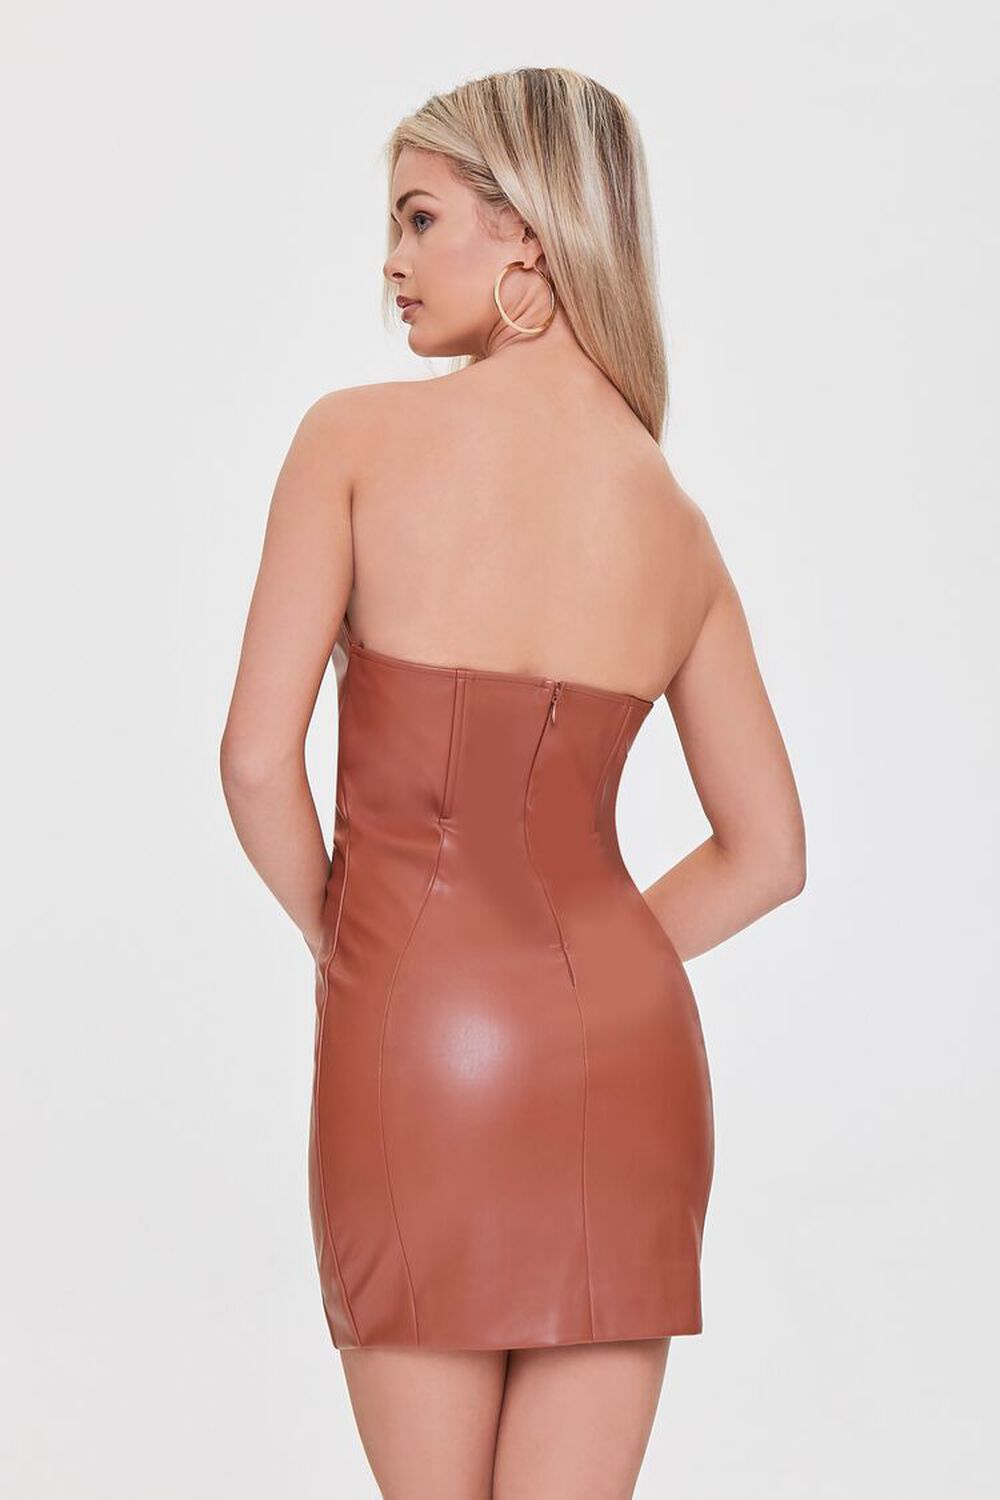 BROWN Faux Leather Mini Dress, image 3